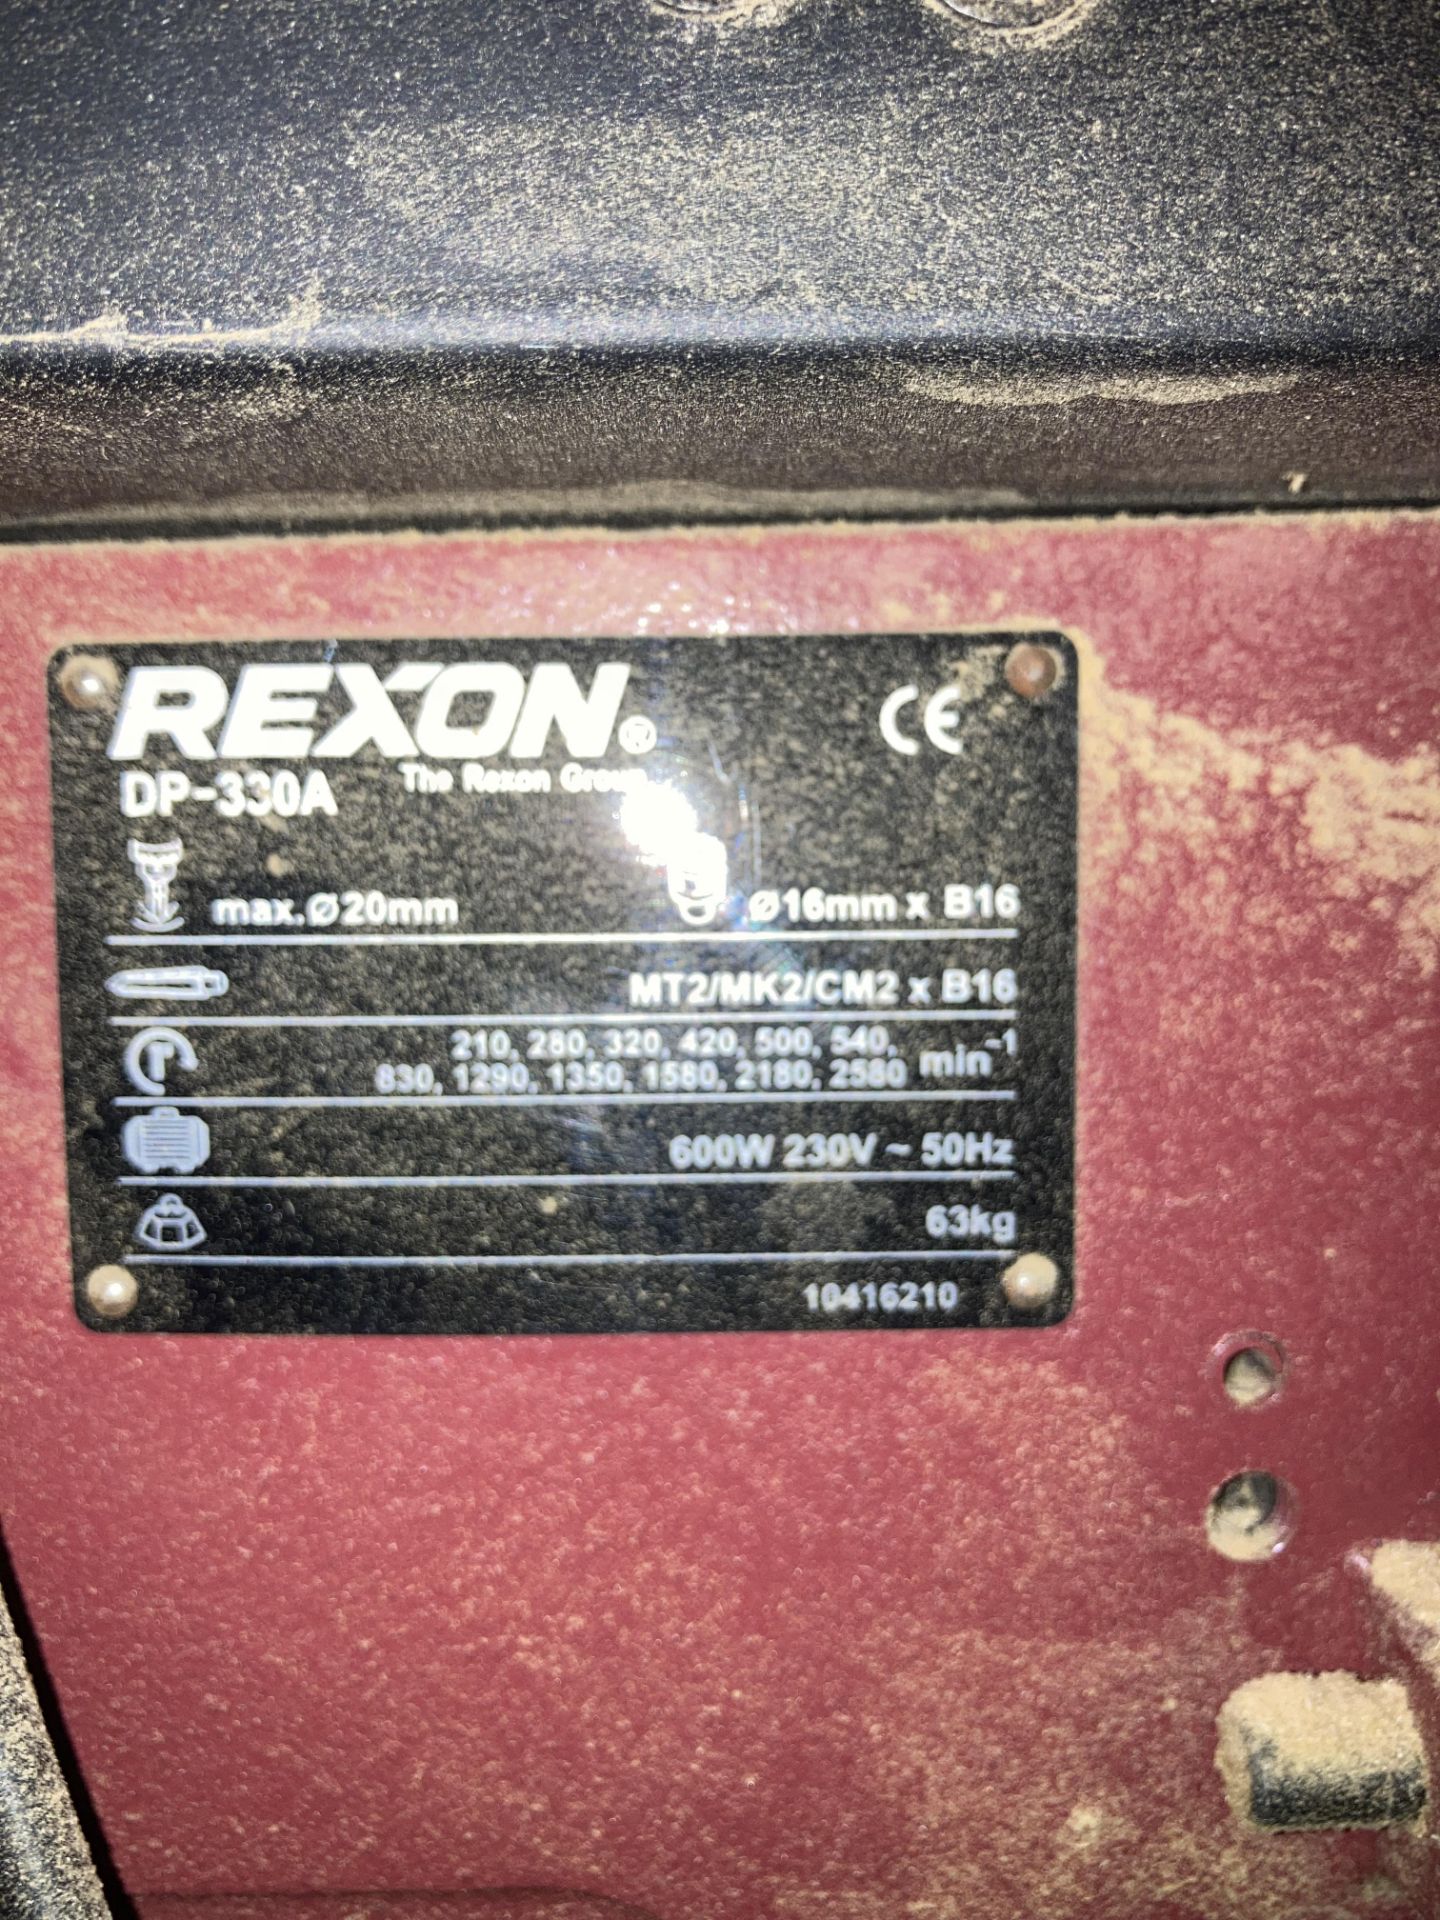 Rexon DP-330A bench drill - Image 3 of 3